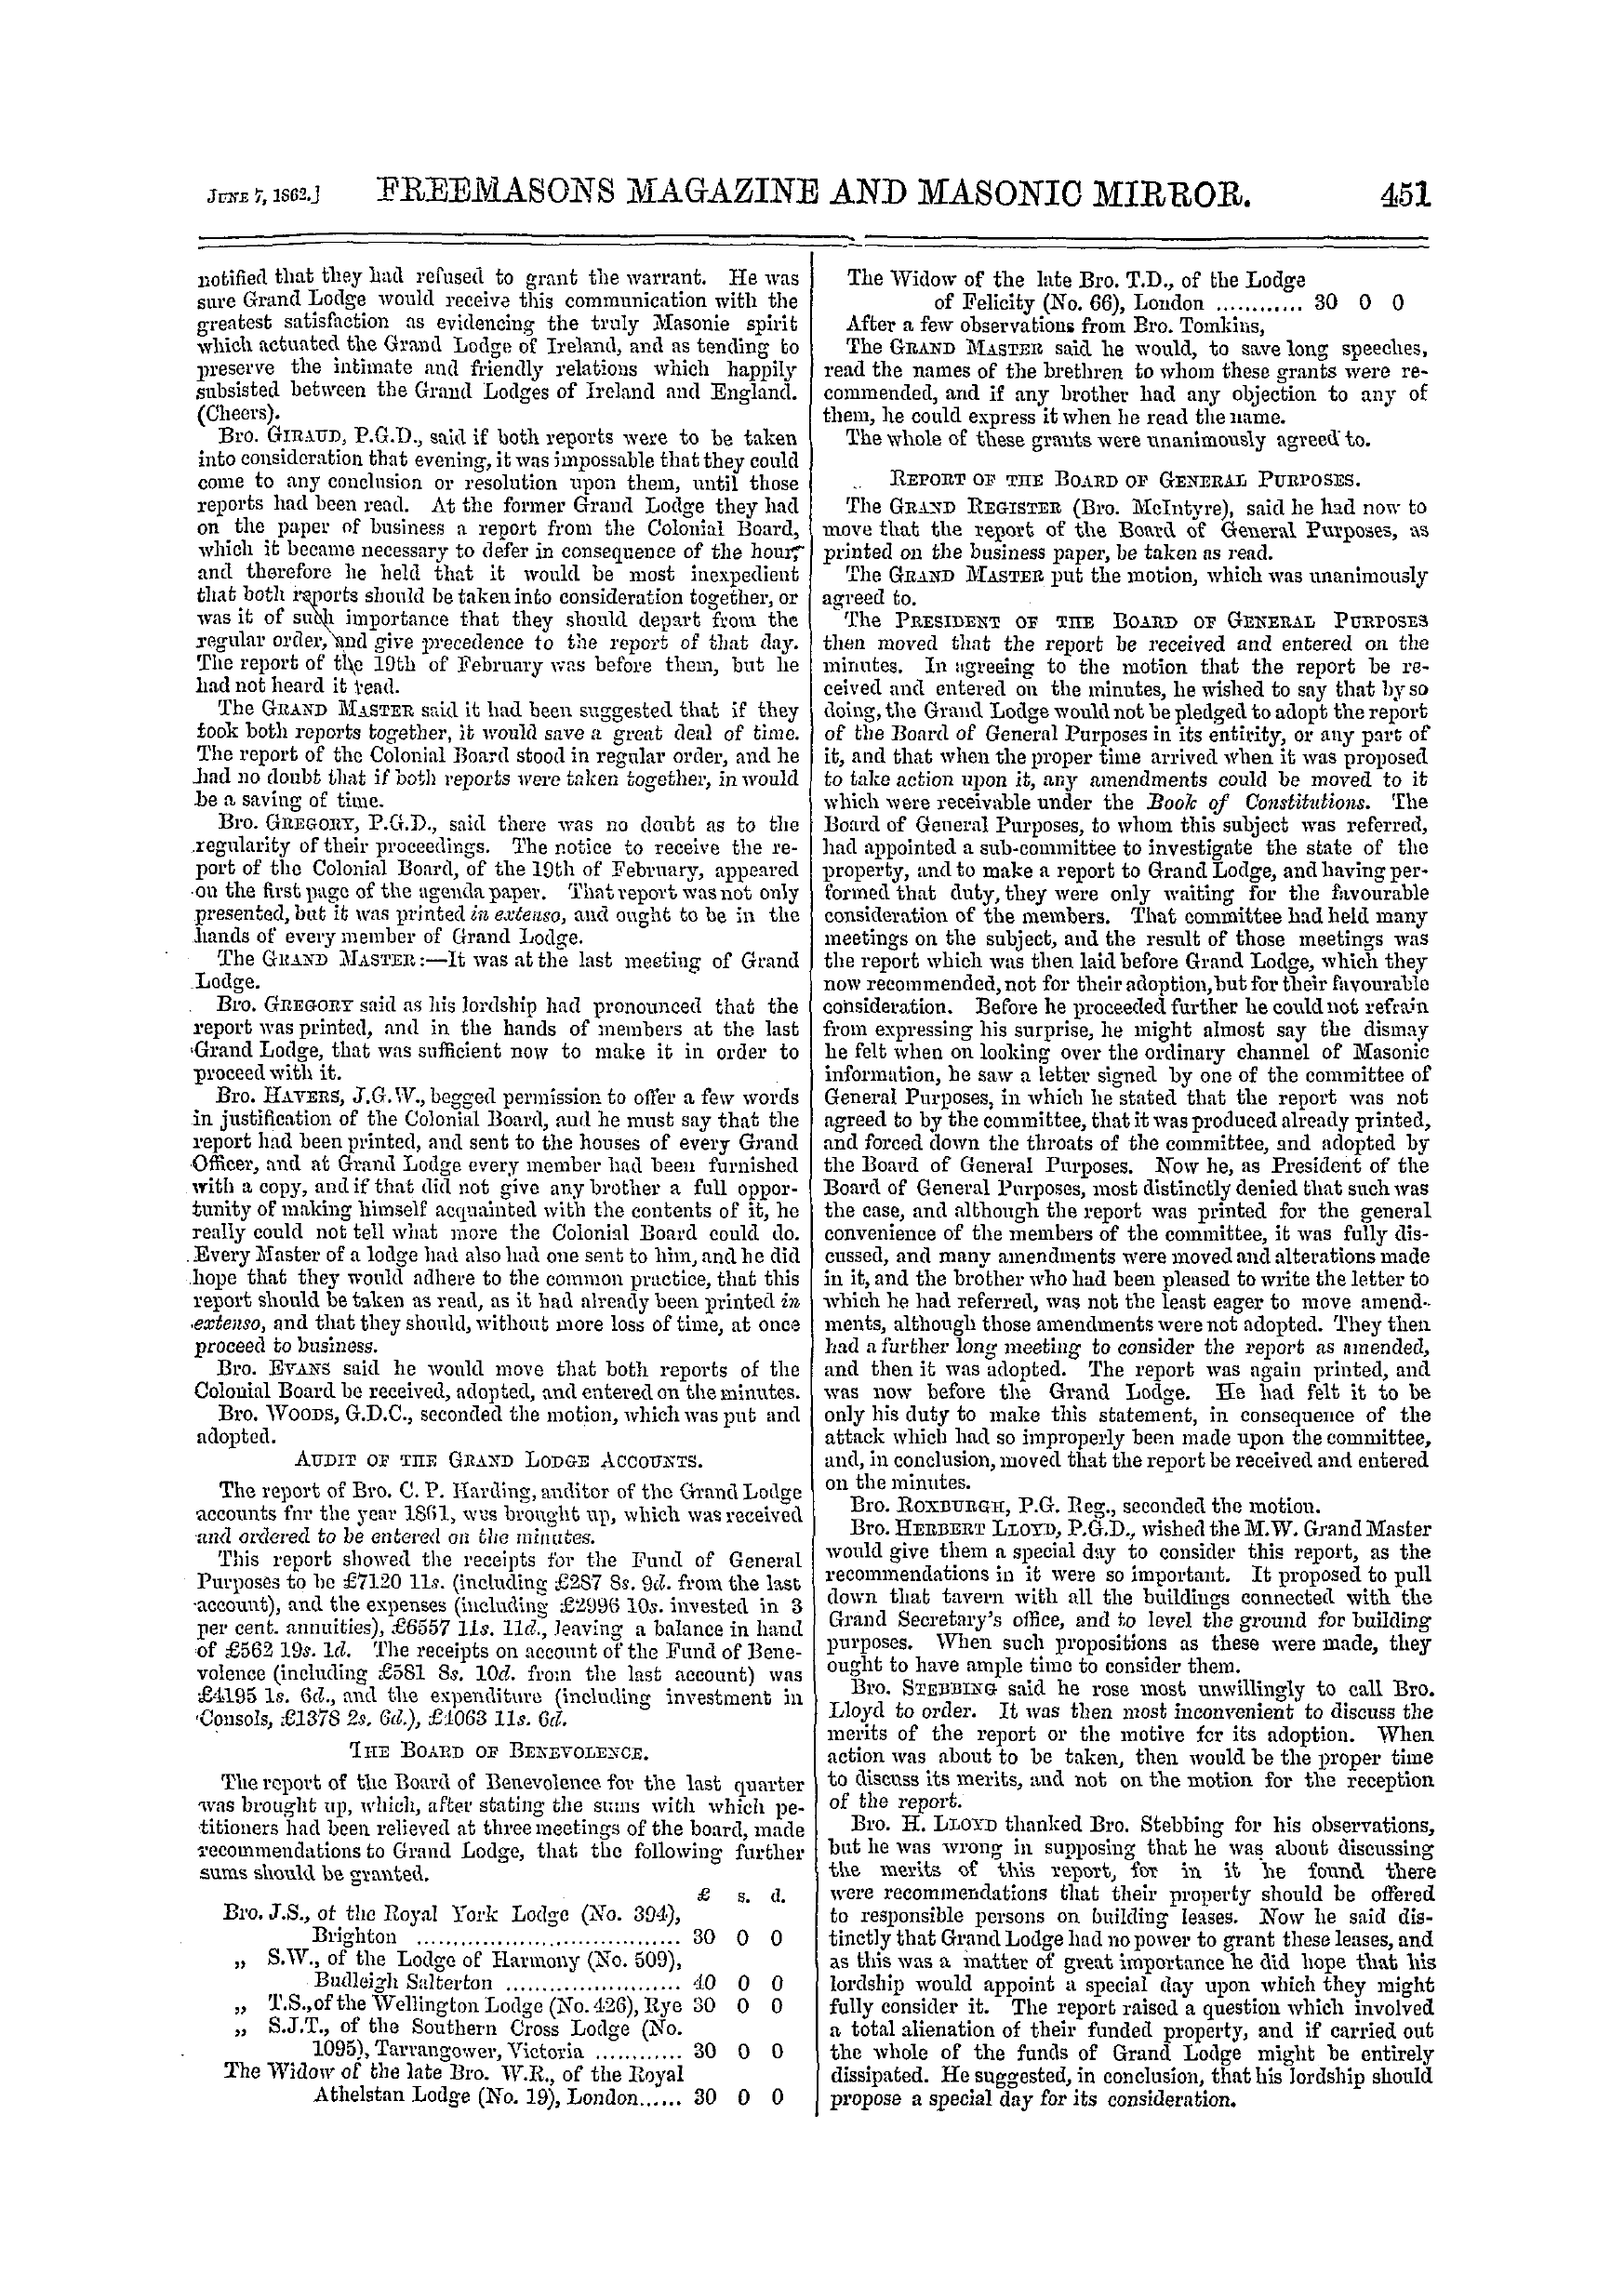 The Freemasons' Monthly Magazine: 1862-06-07 - Grand Lodge.